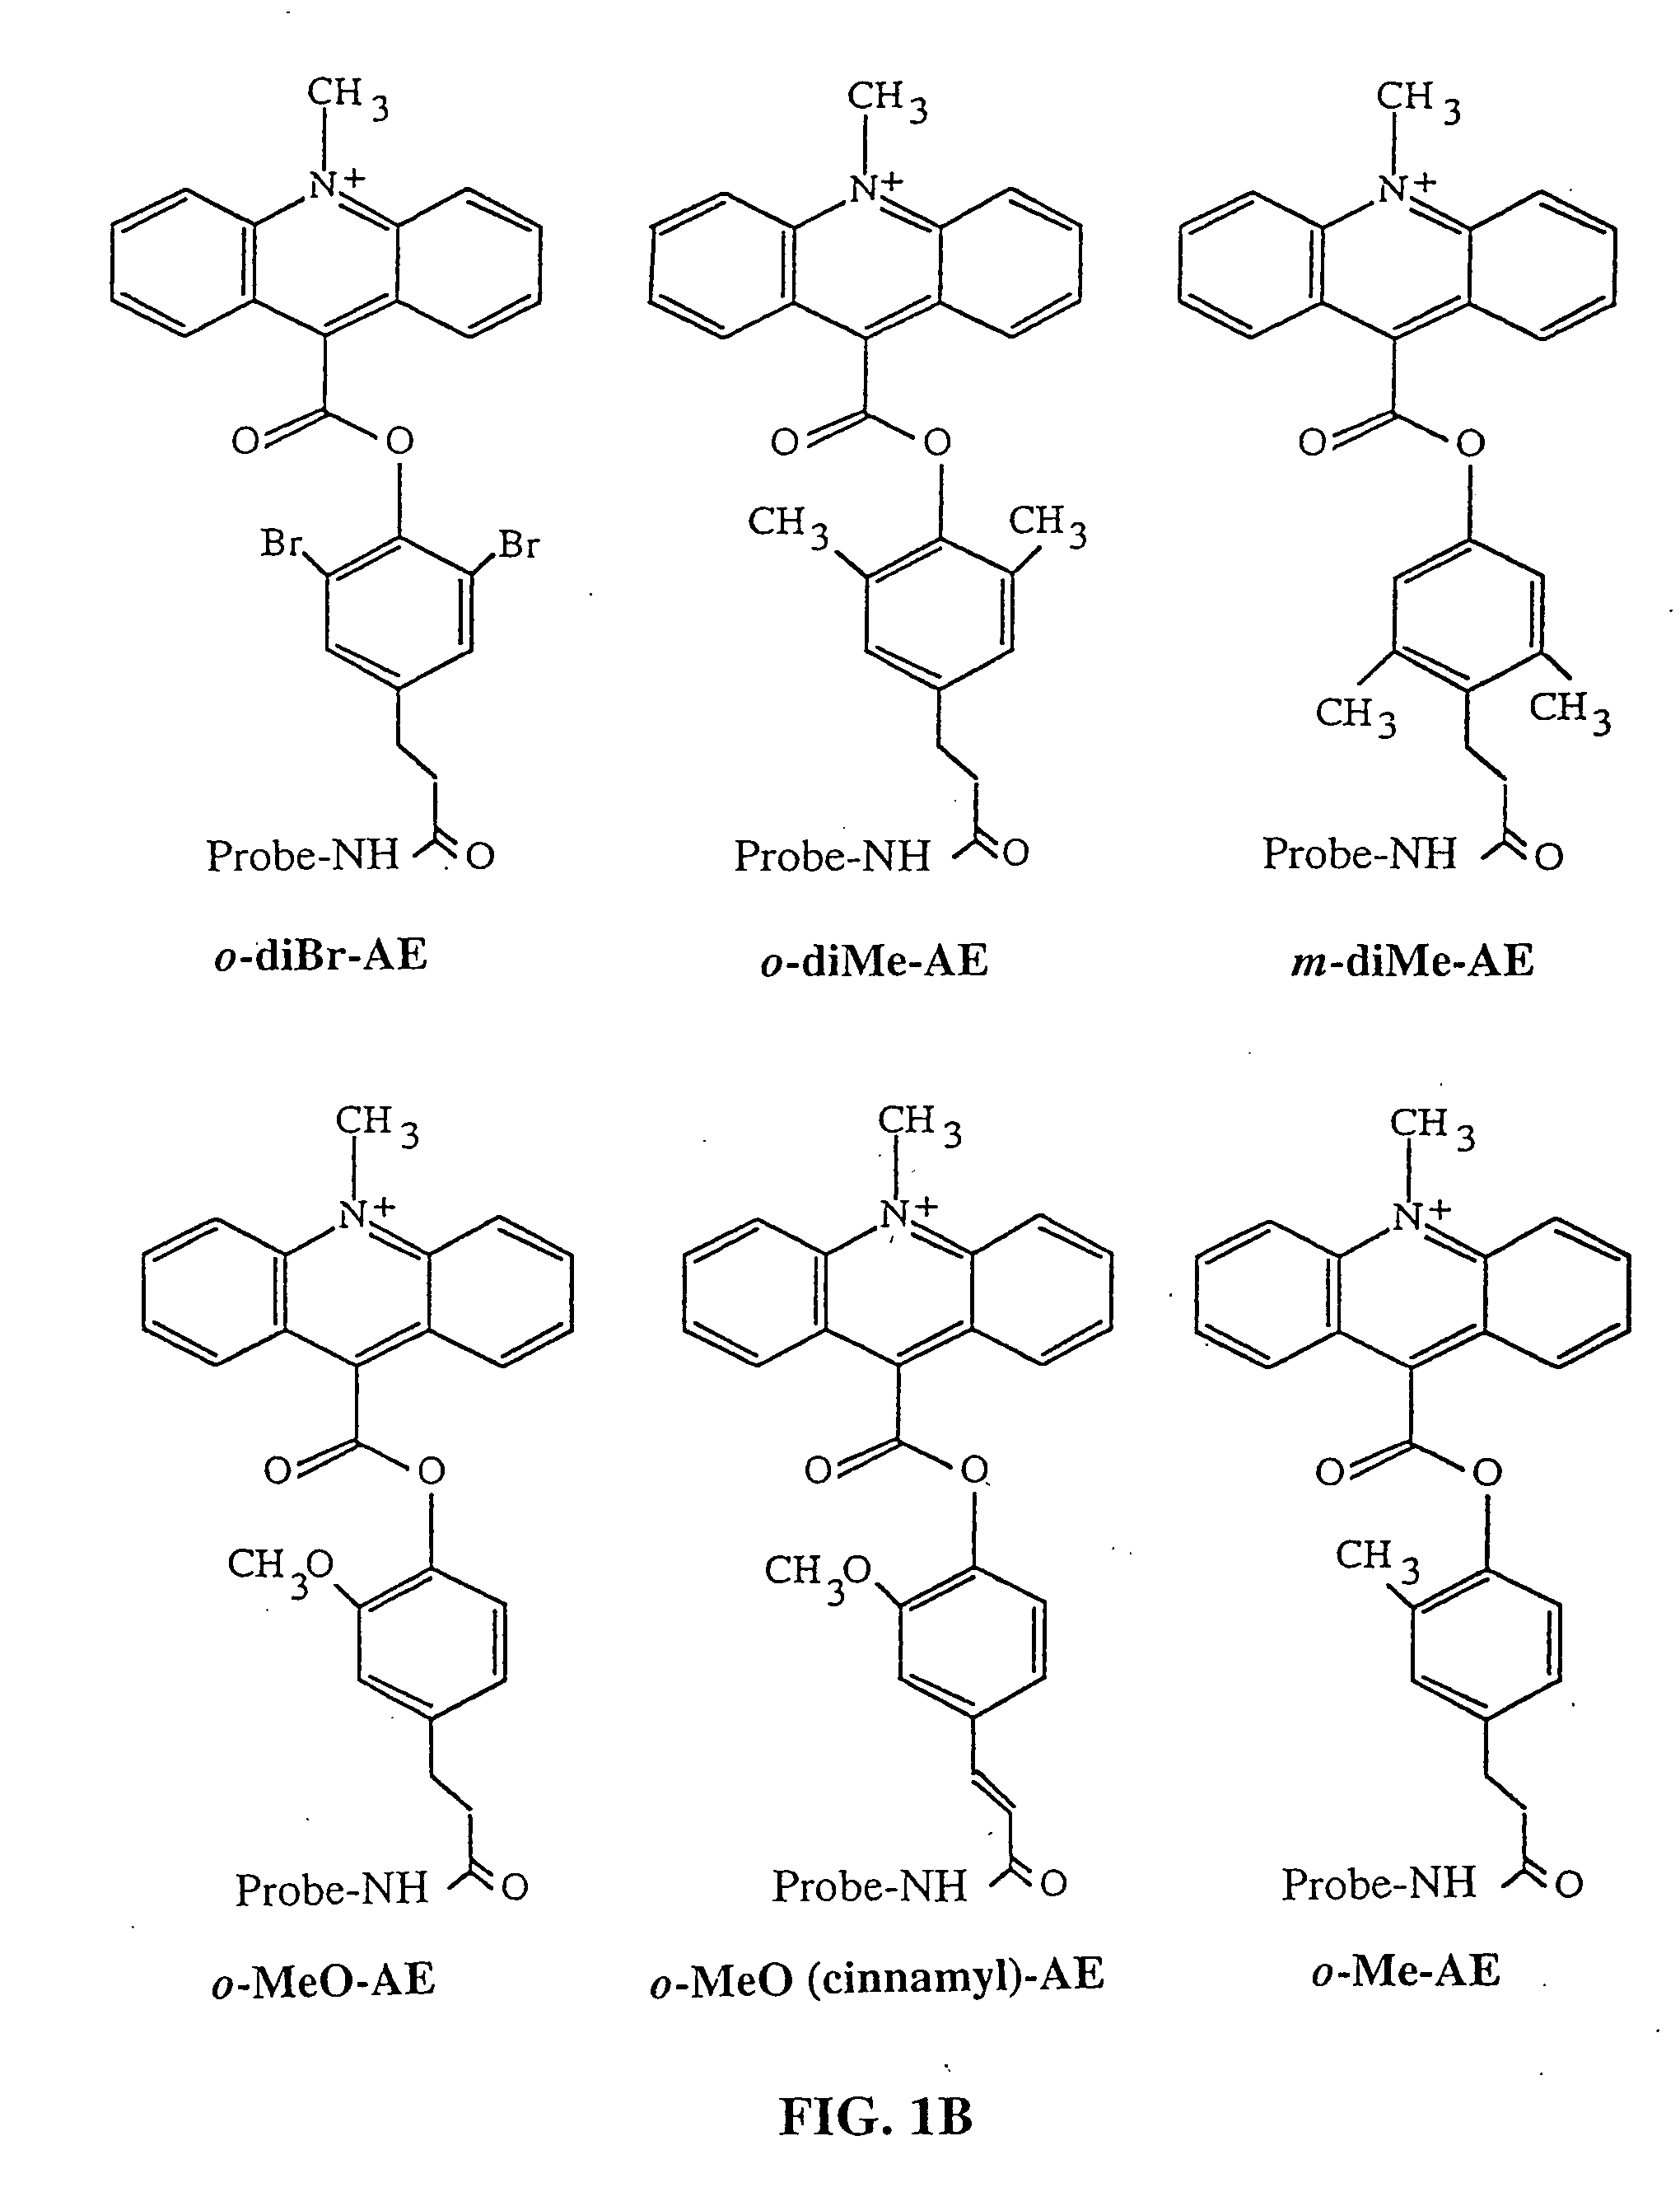 Kits containing modified amplification oligonucleotides